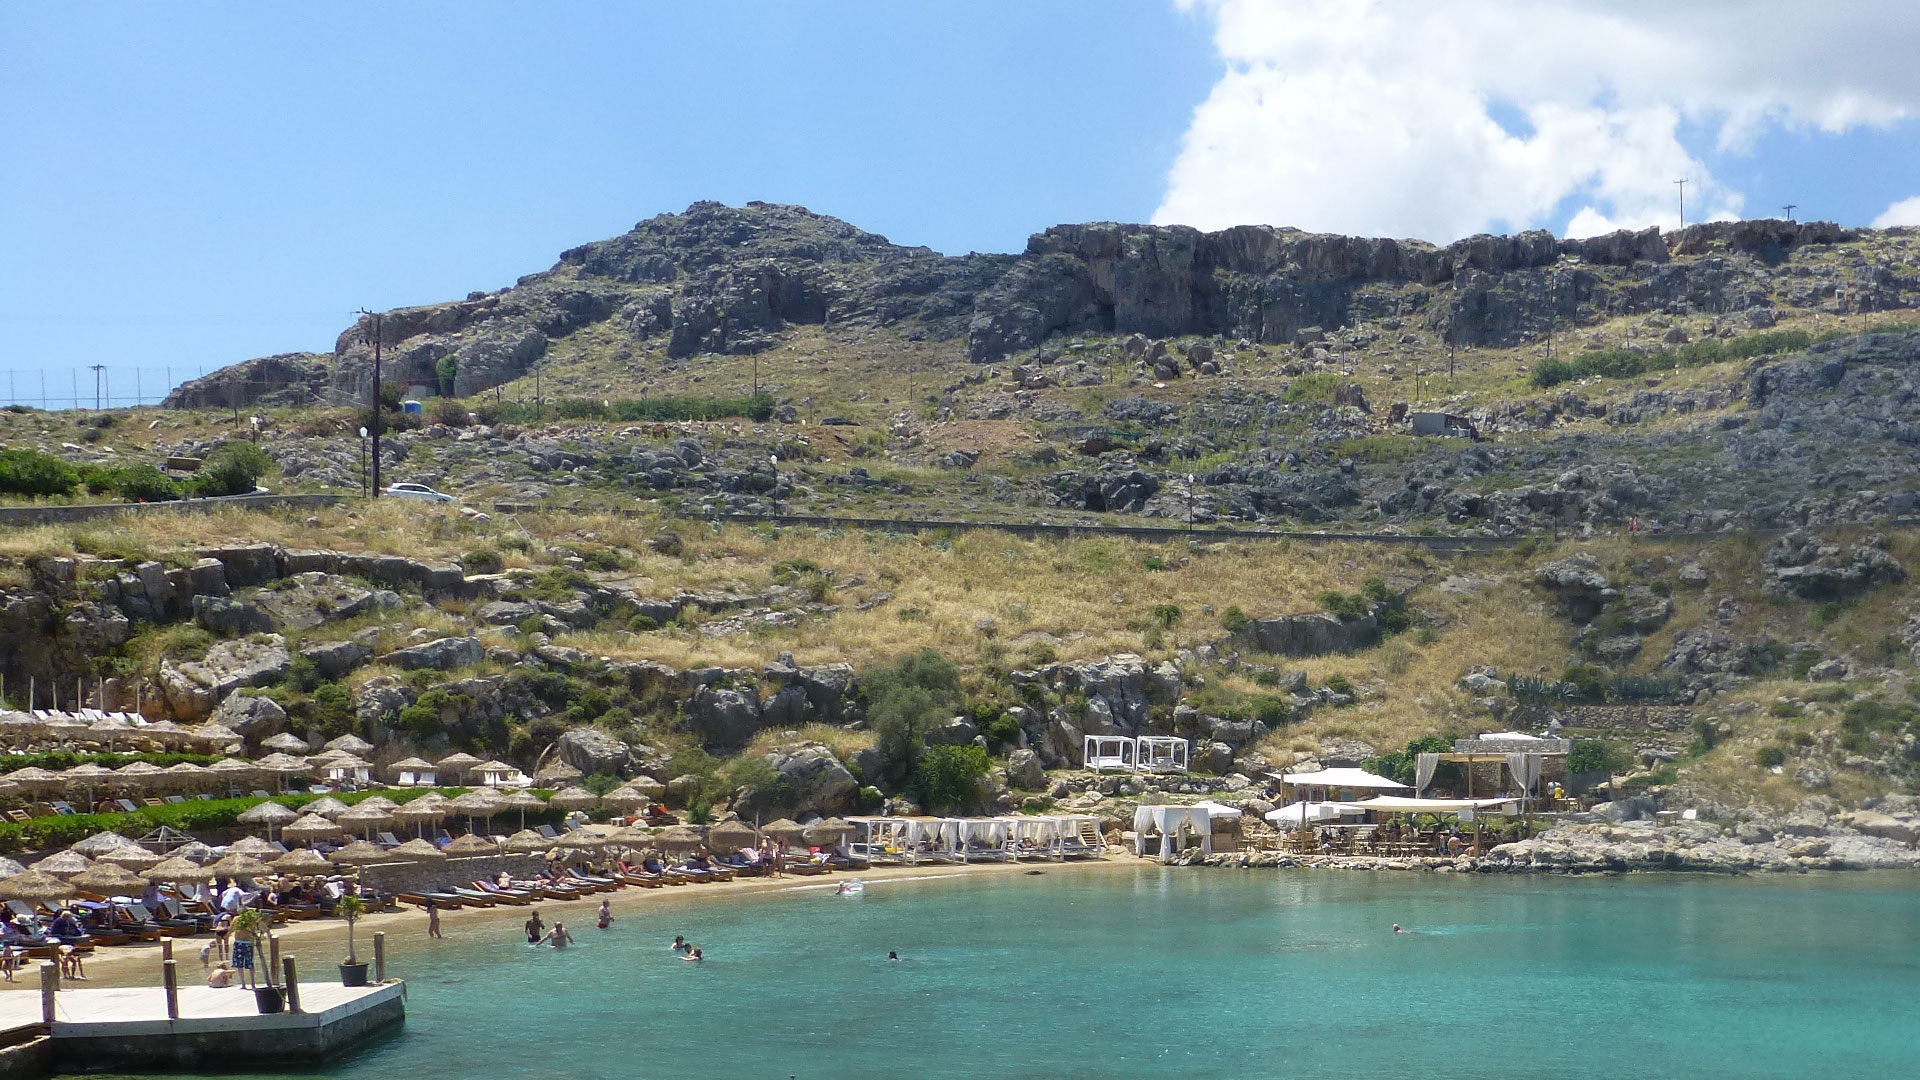 St Paul Bay offers a nice sandy beach for a swim in the Aegean Sea.